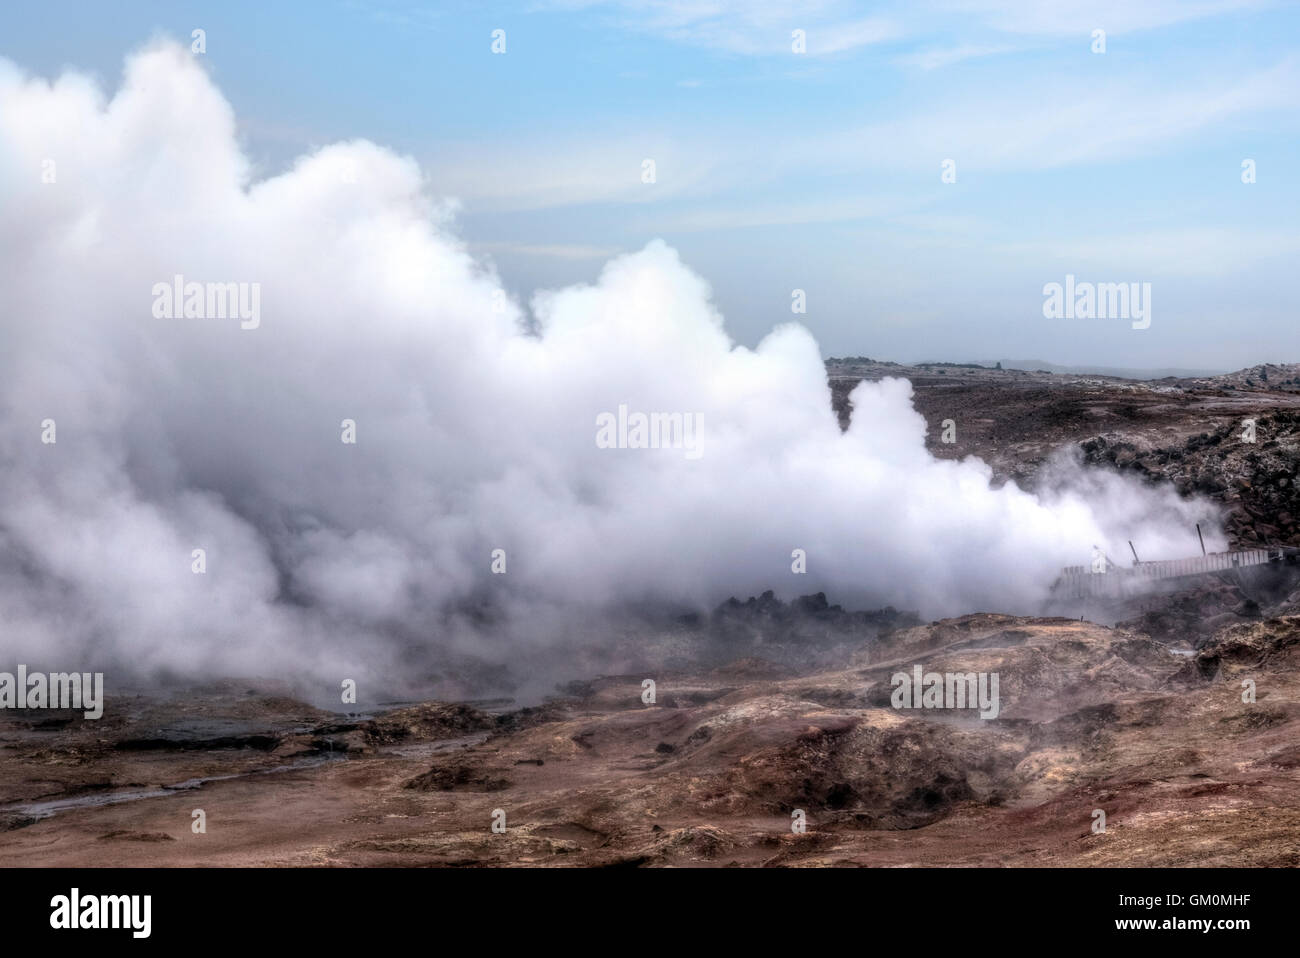 geothermal area Gunnuhver, Reykjanes, Grindavik, Iceland Stock Photo